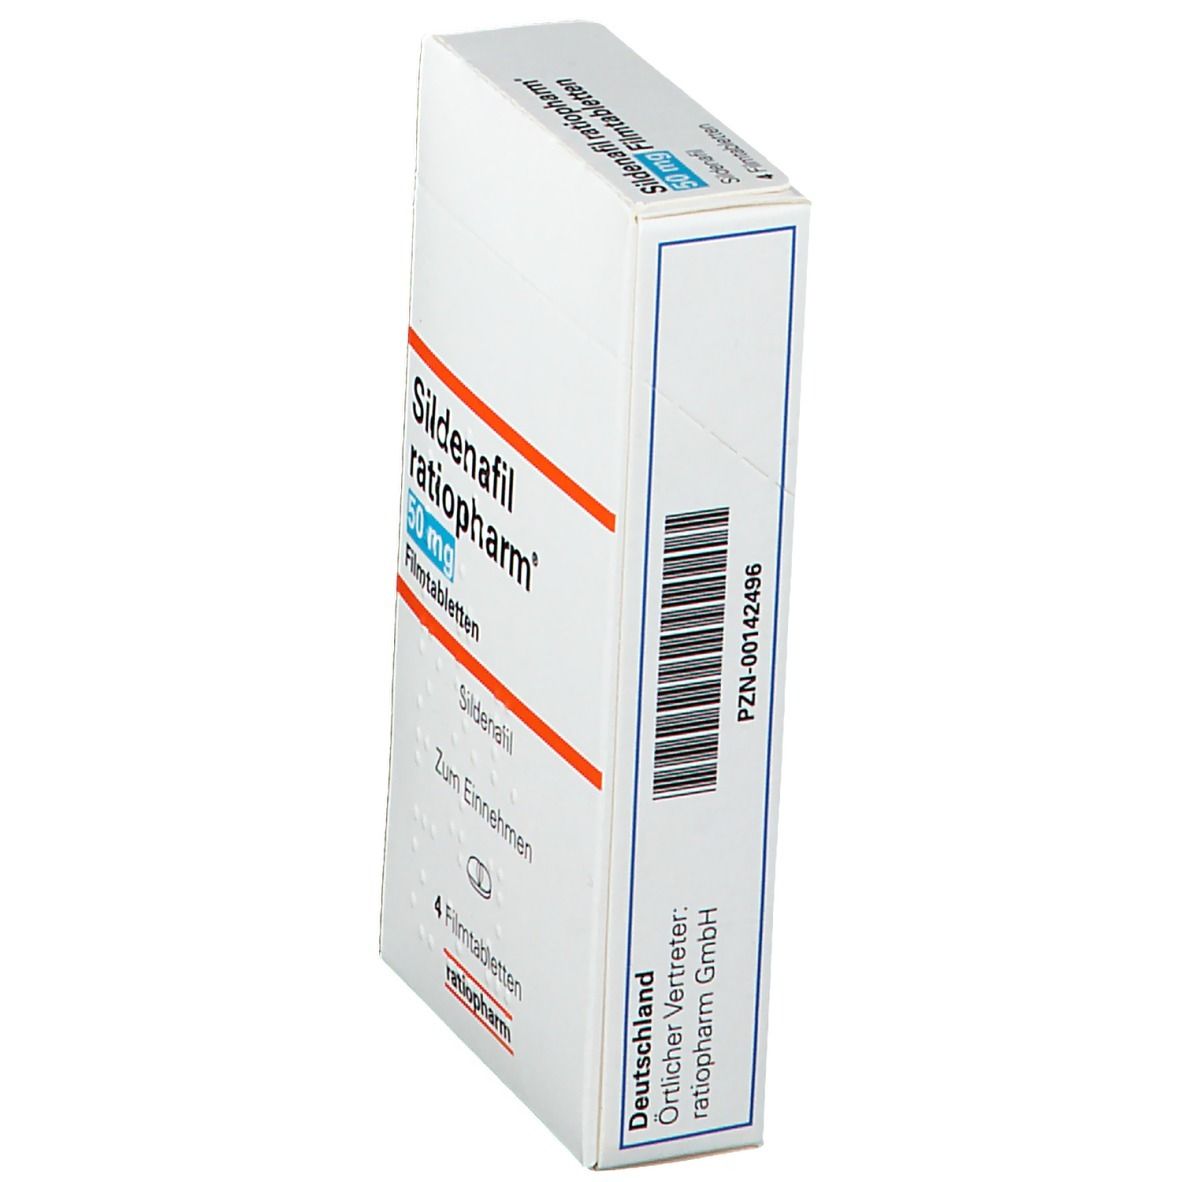 Sildenafil-ratiopharm® 50 mg